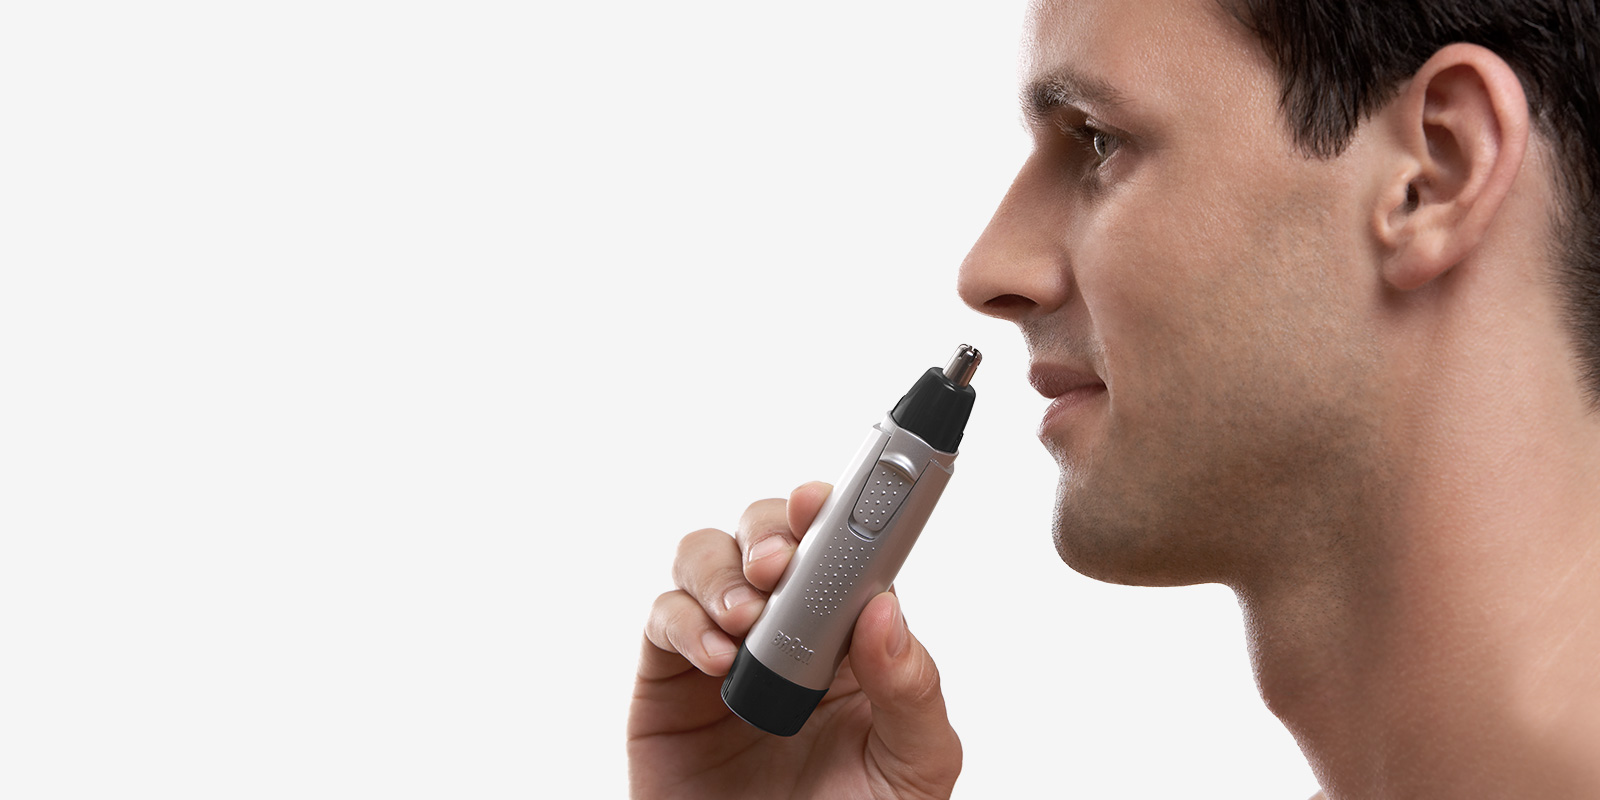 Swiss Alexa Manual Mechanical Nose  Ear Hair Removal Trimmer  Royal  Technologies  genuinebatterycom